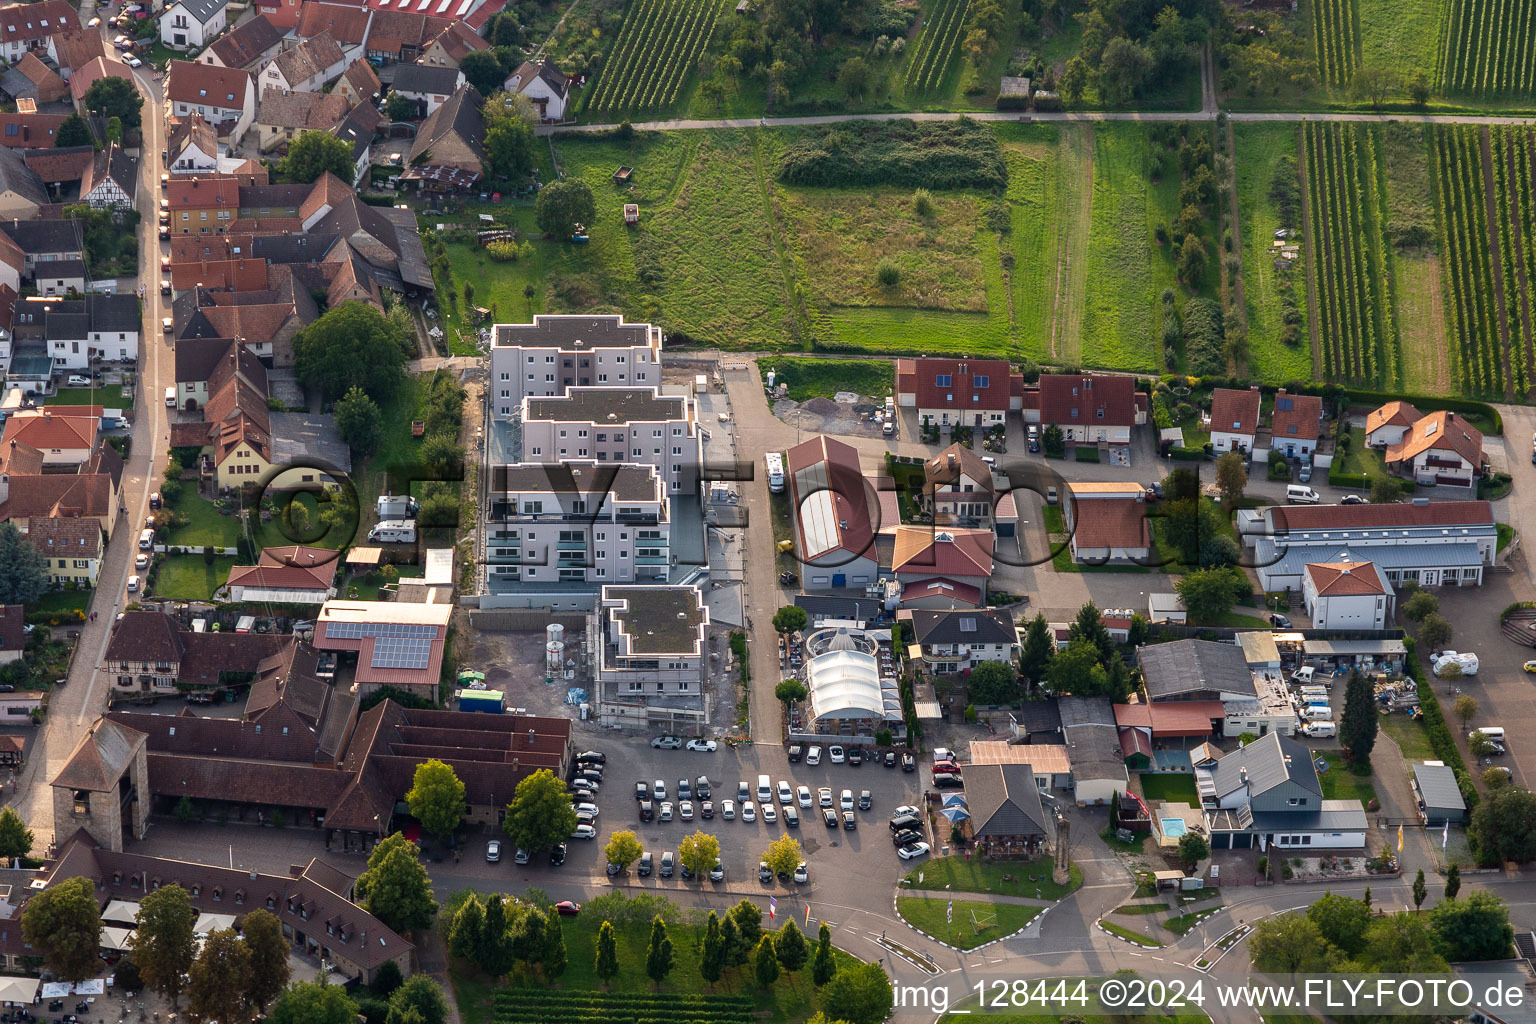 Oblique view of New buildings on Silvanerstr in the district Schweigen in Schweigen-Rechtenbach in the state Rhineland-Palatinate, Germany